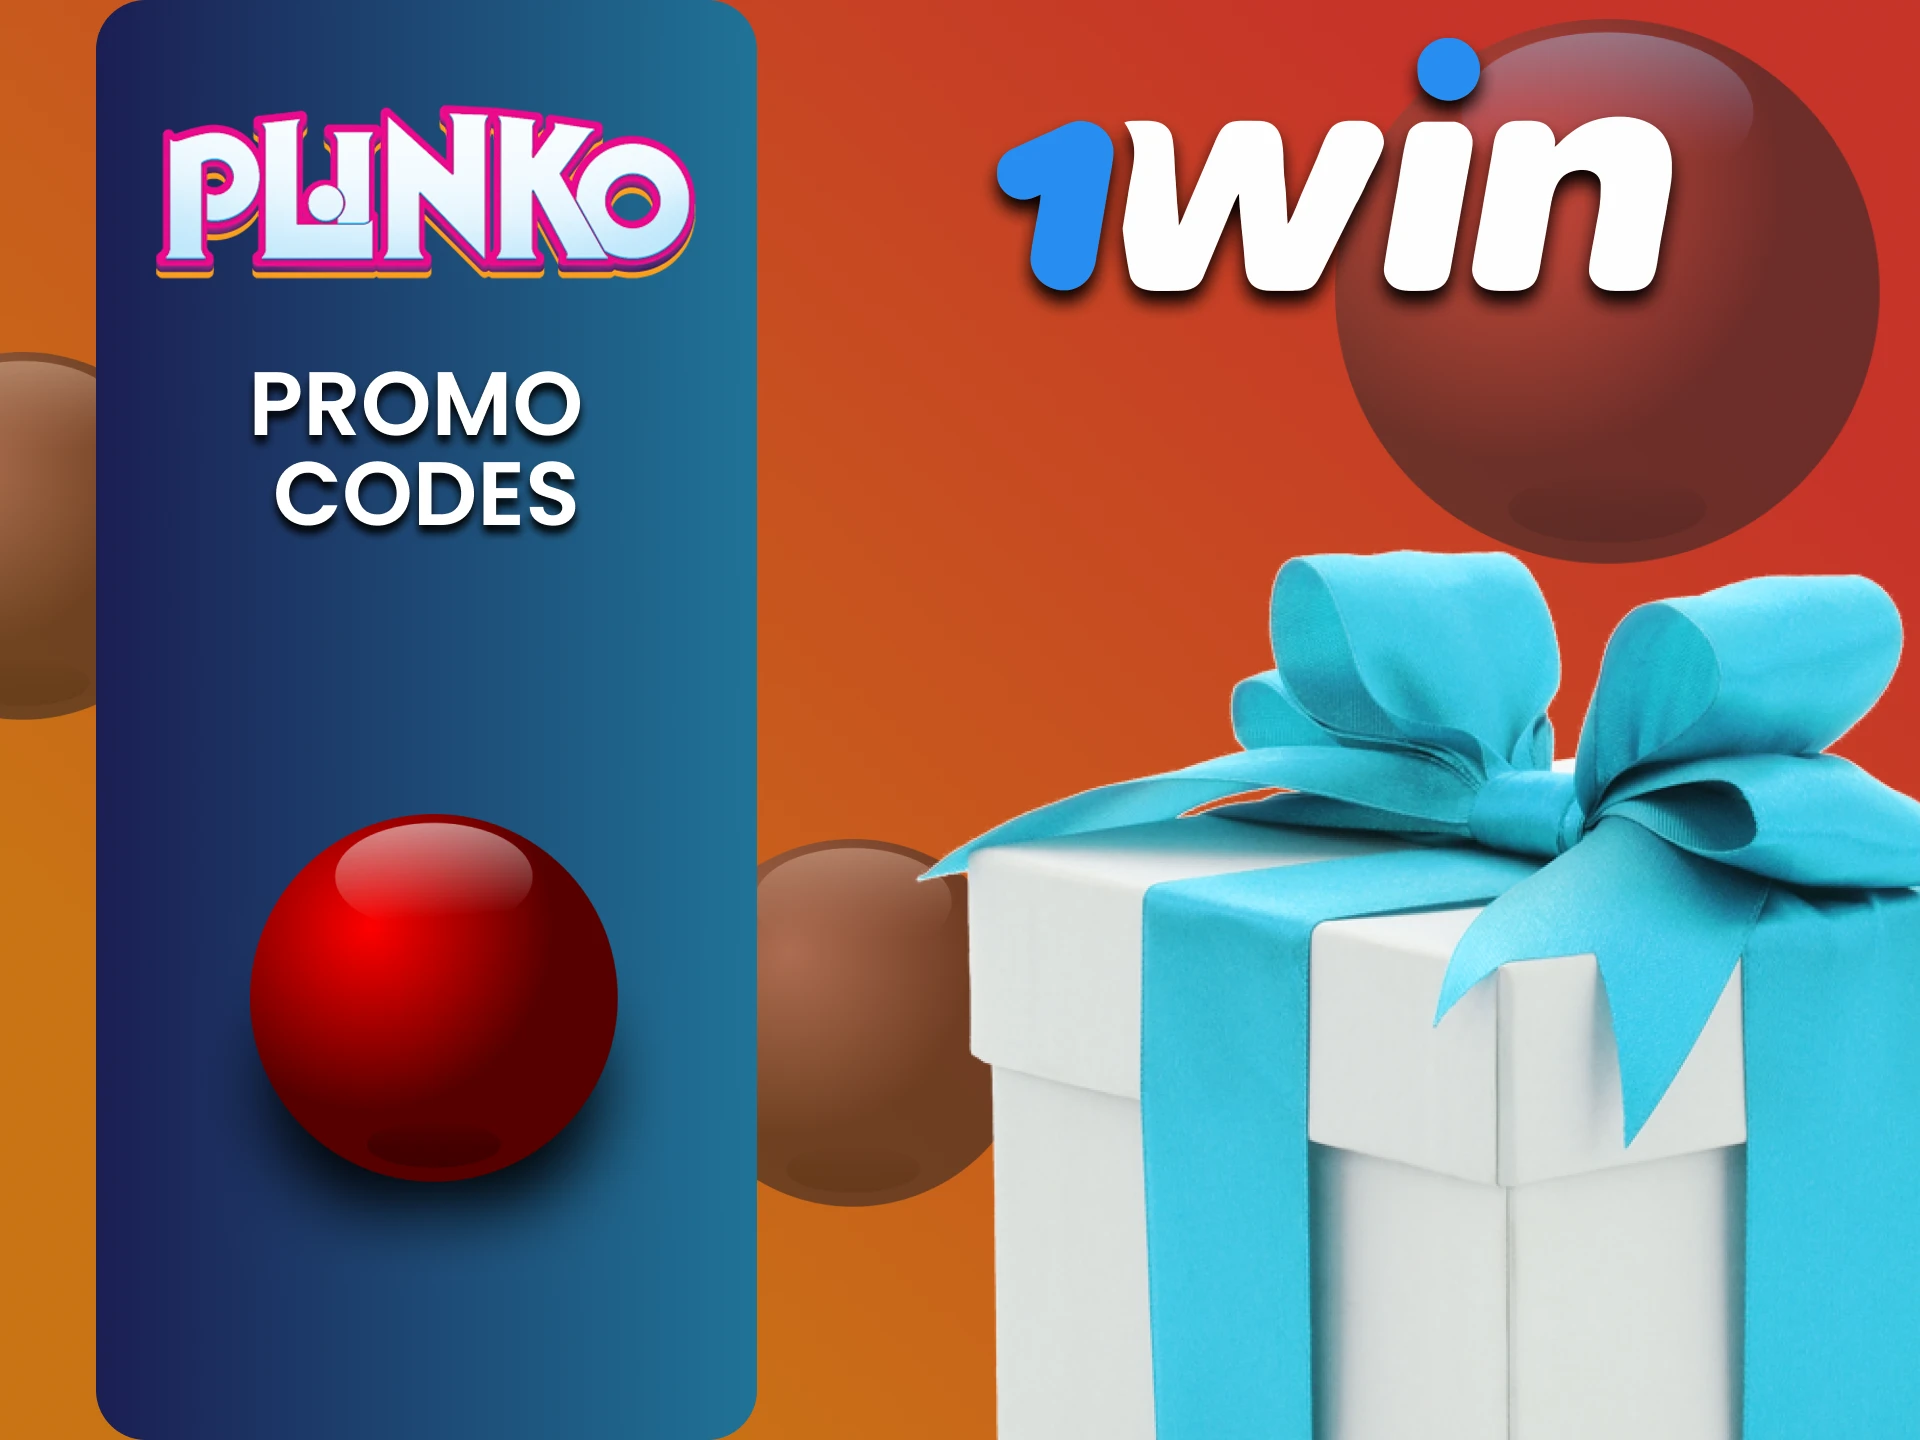 Enter the bonus promotional code for the game Plinko from 1win.